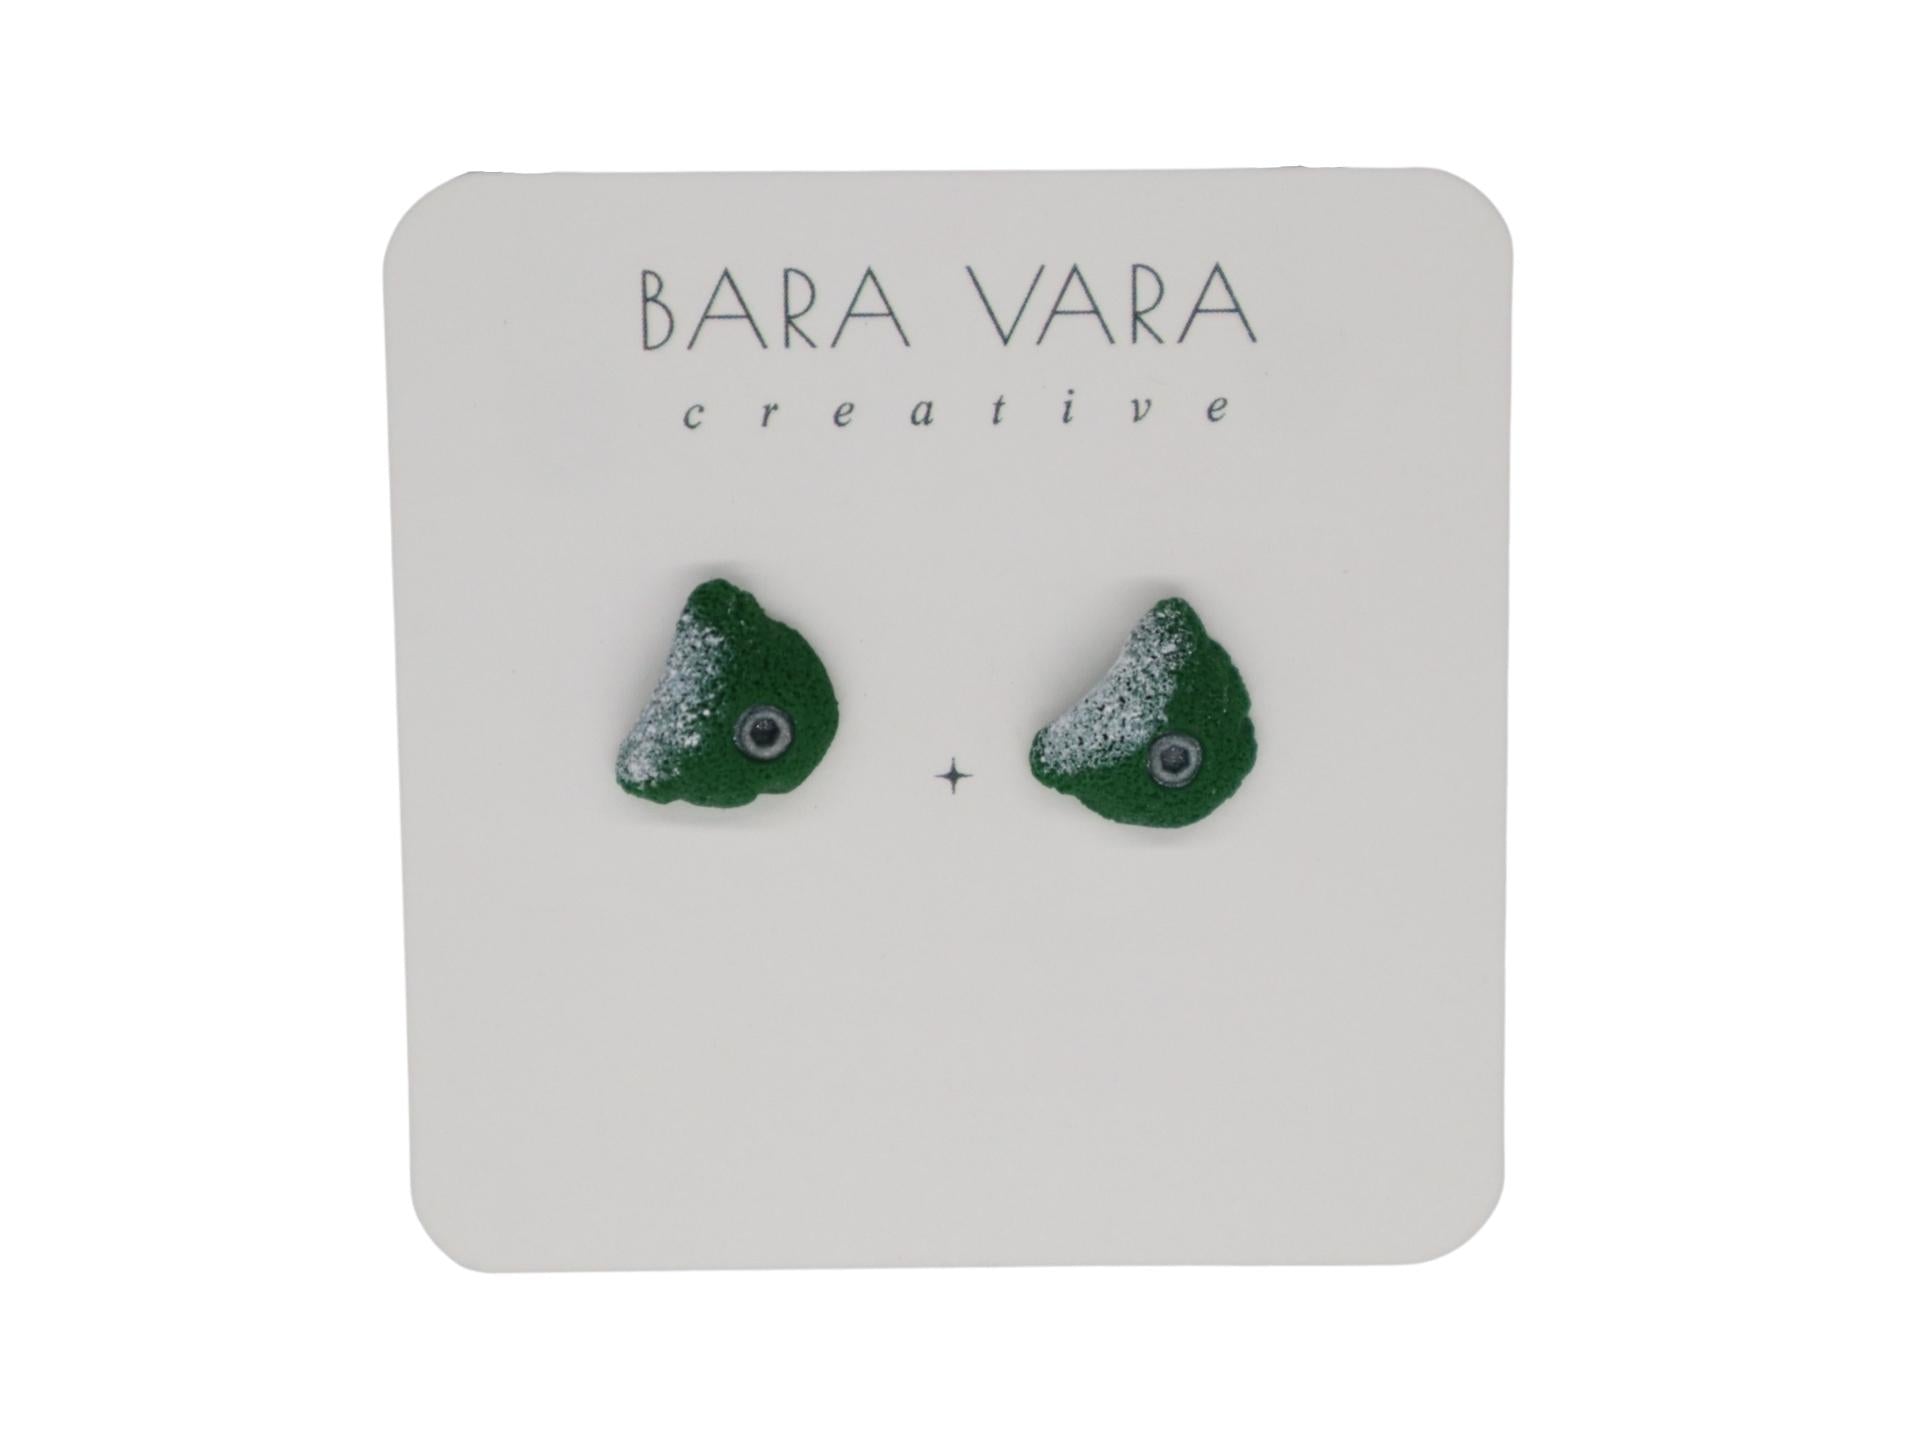 Bara Vara Creative Earrings - Forest Green Jugs - Happy Biner